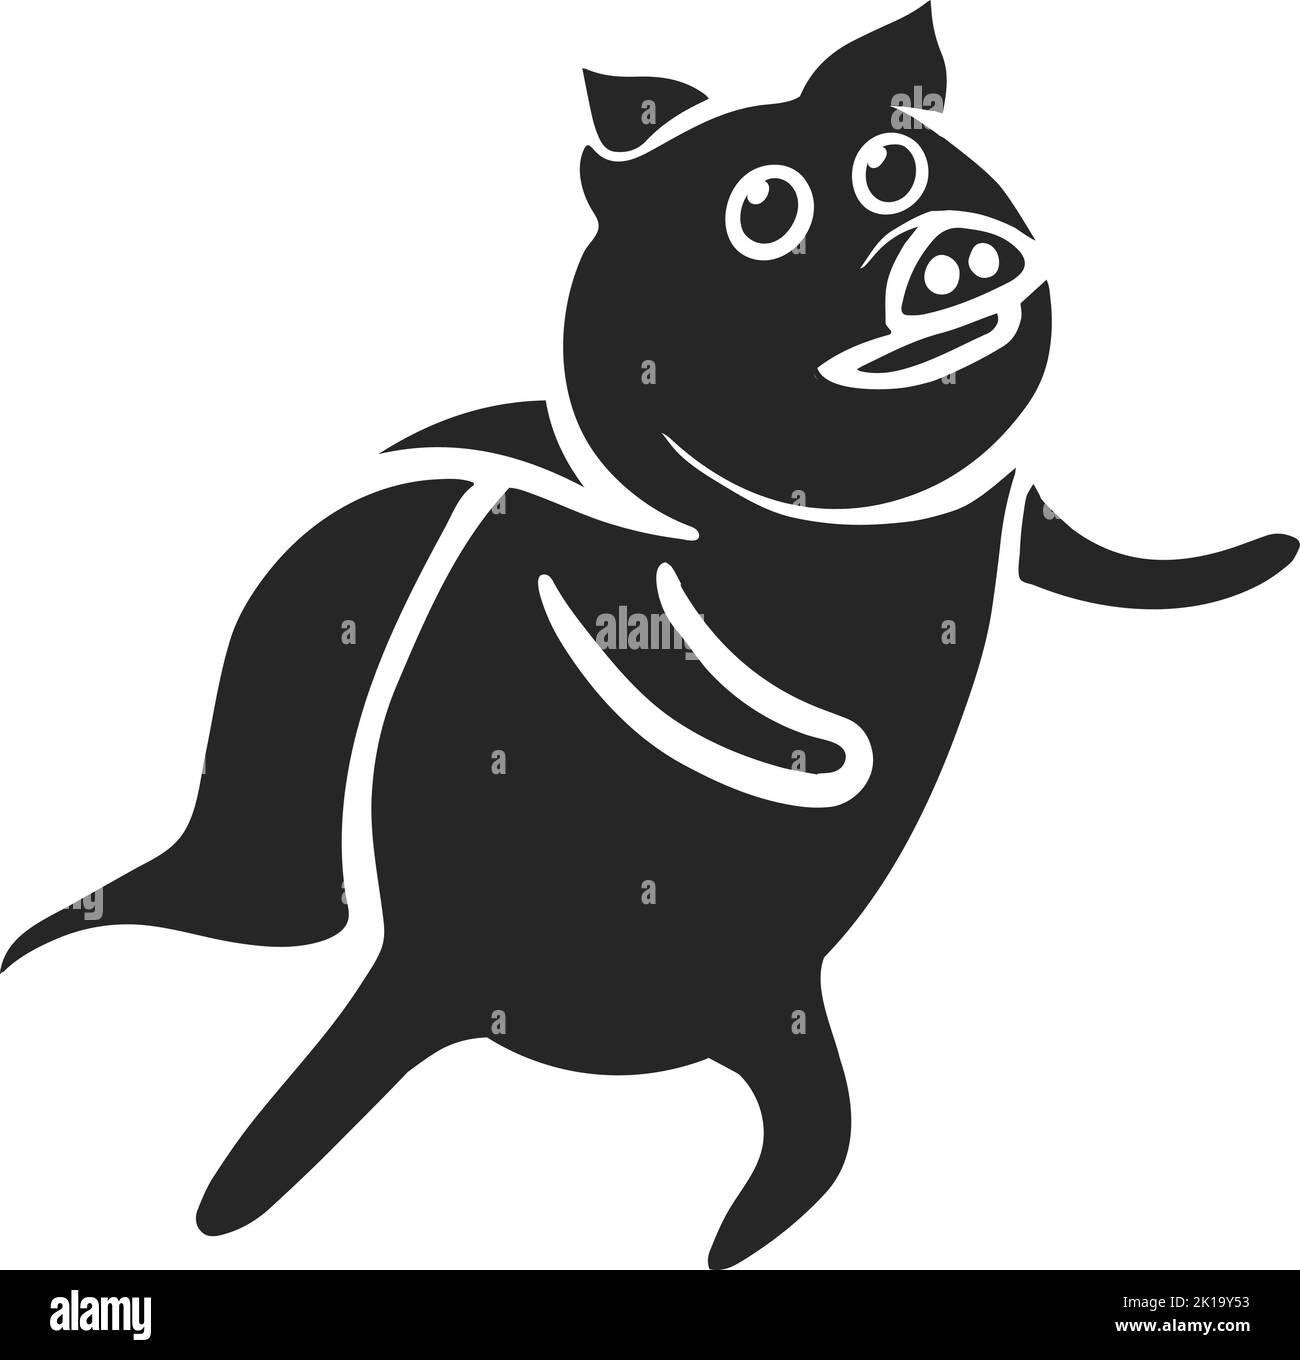 Handgezeichnetes Icon-Schwein. Vektorgrafik. Stock Vektor